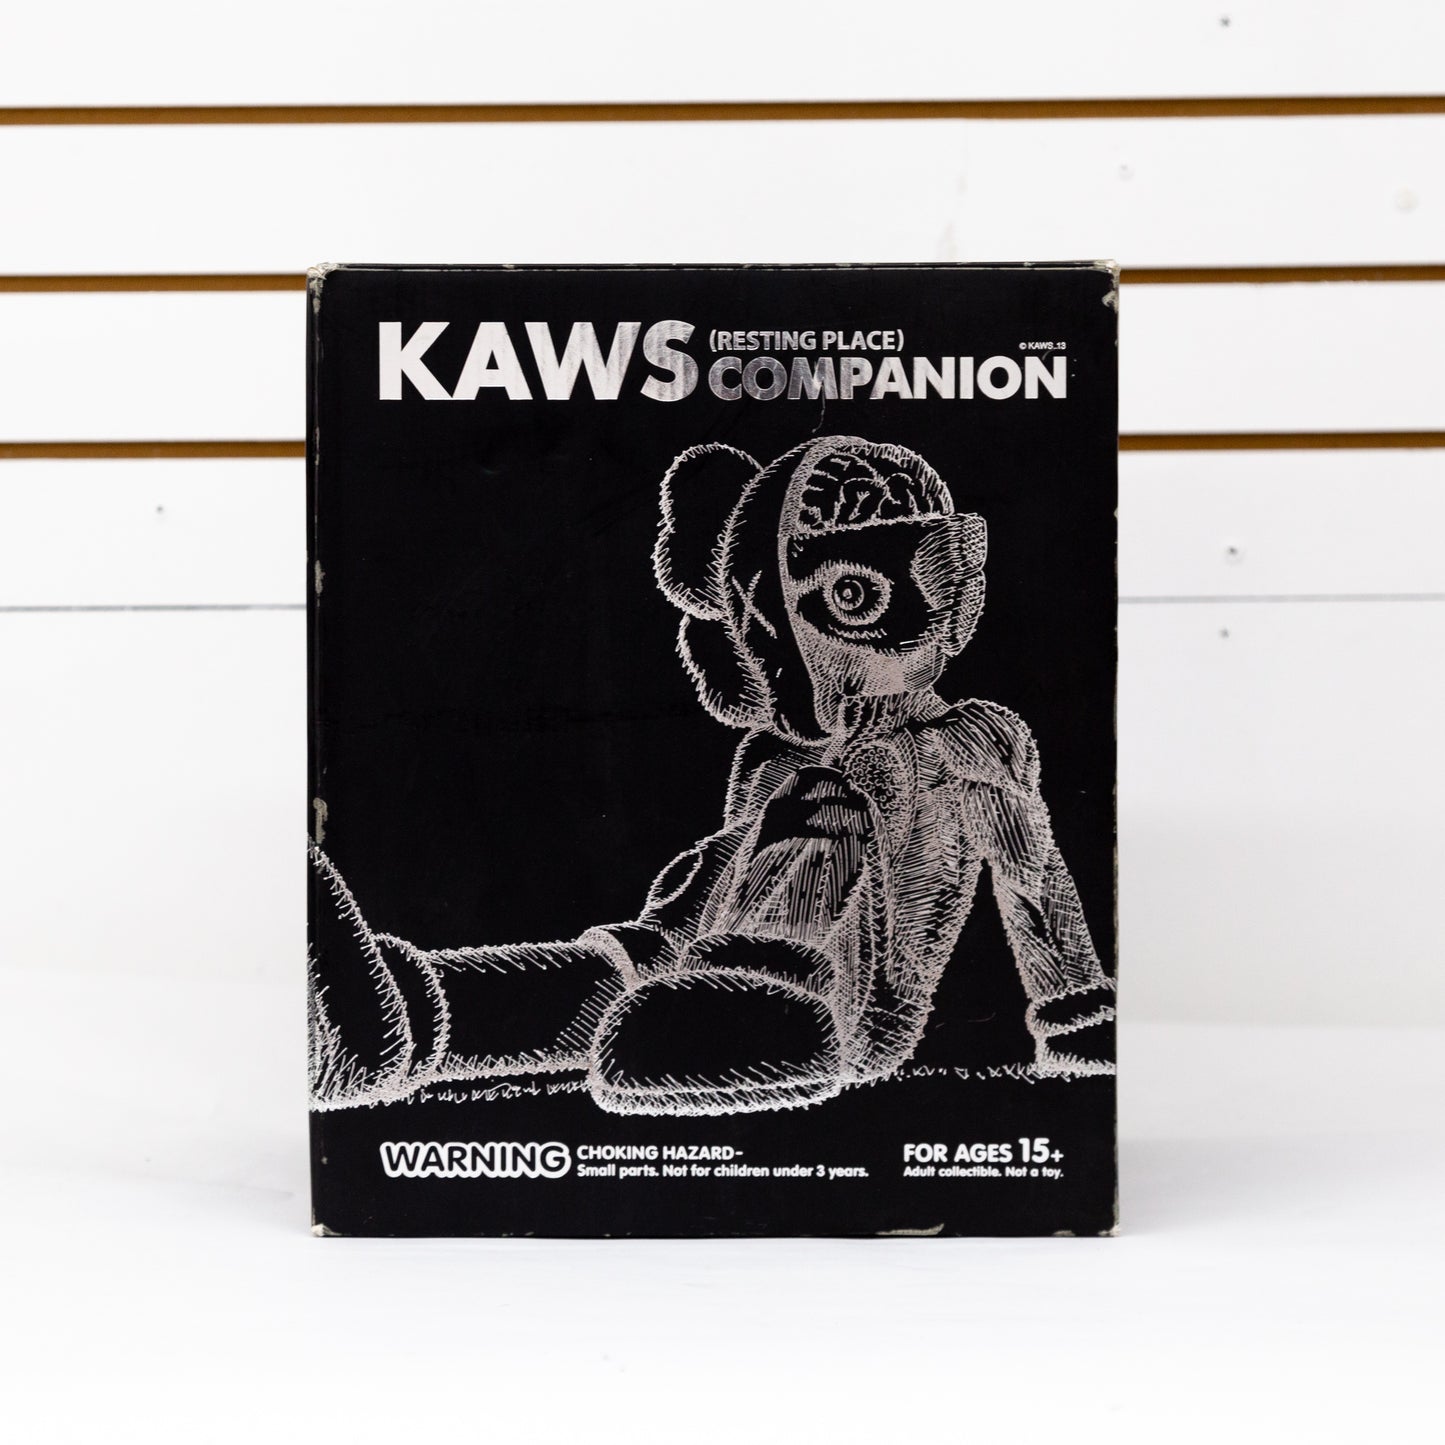 2013 Kaws Resting Place Companion